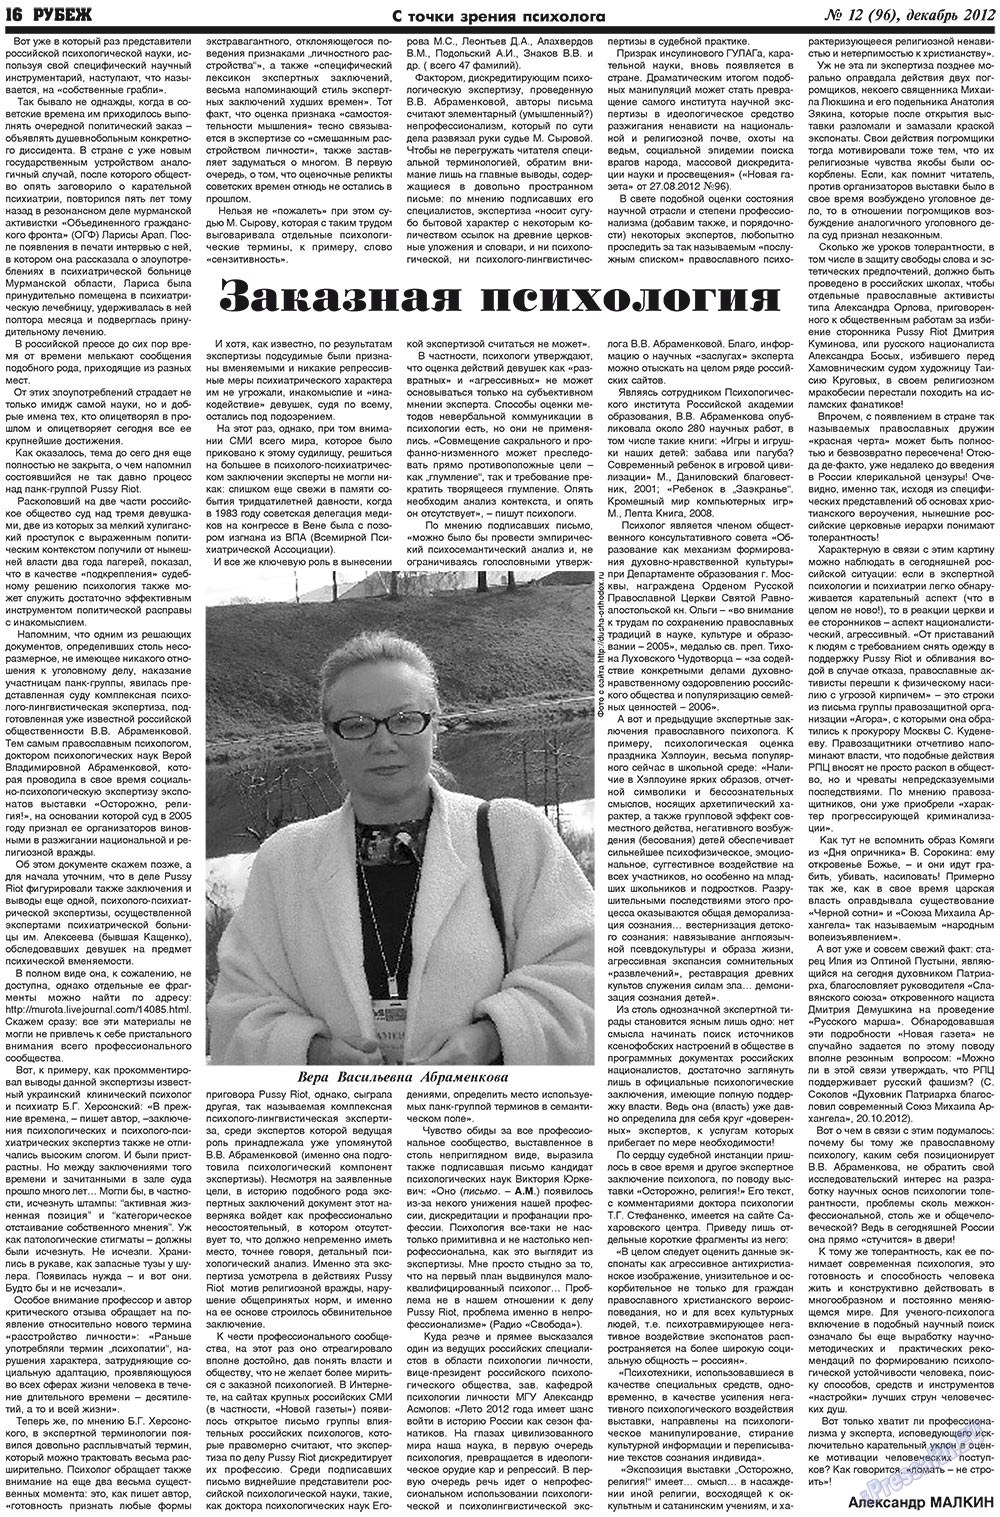 Рубеж, газета. 2012 №12 стр.16